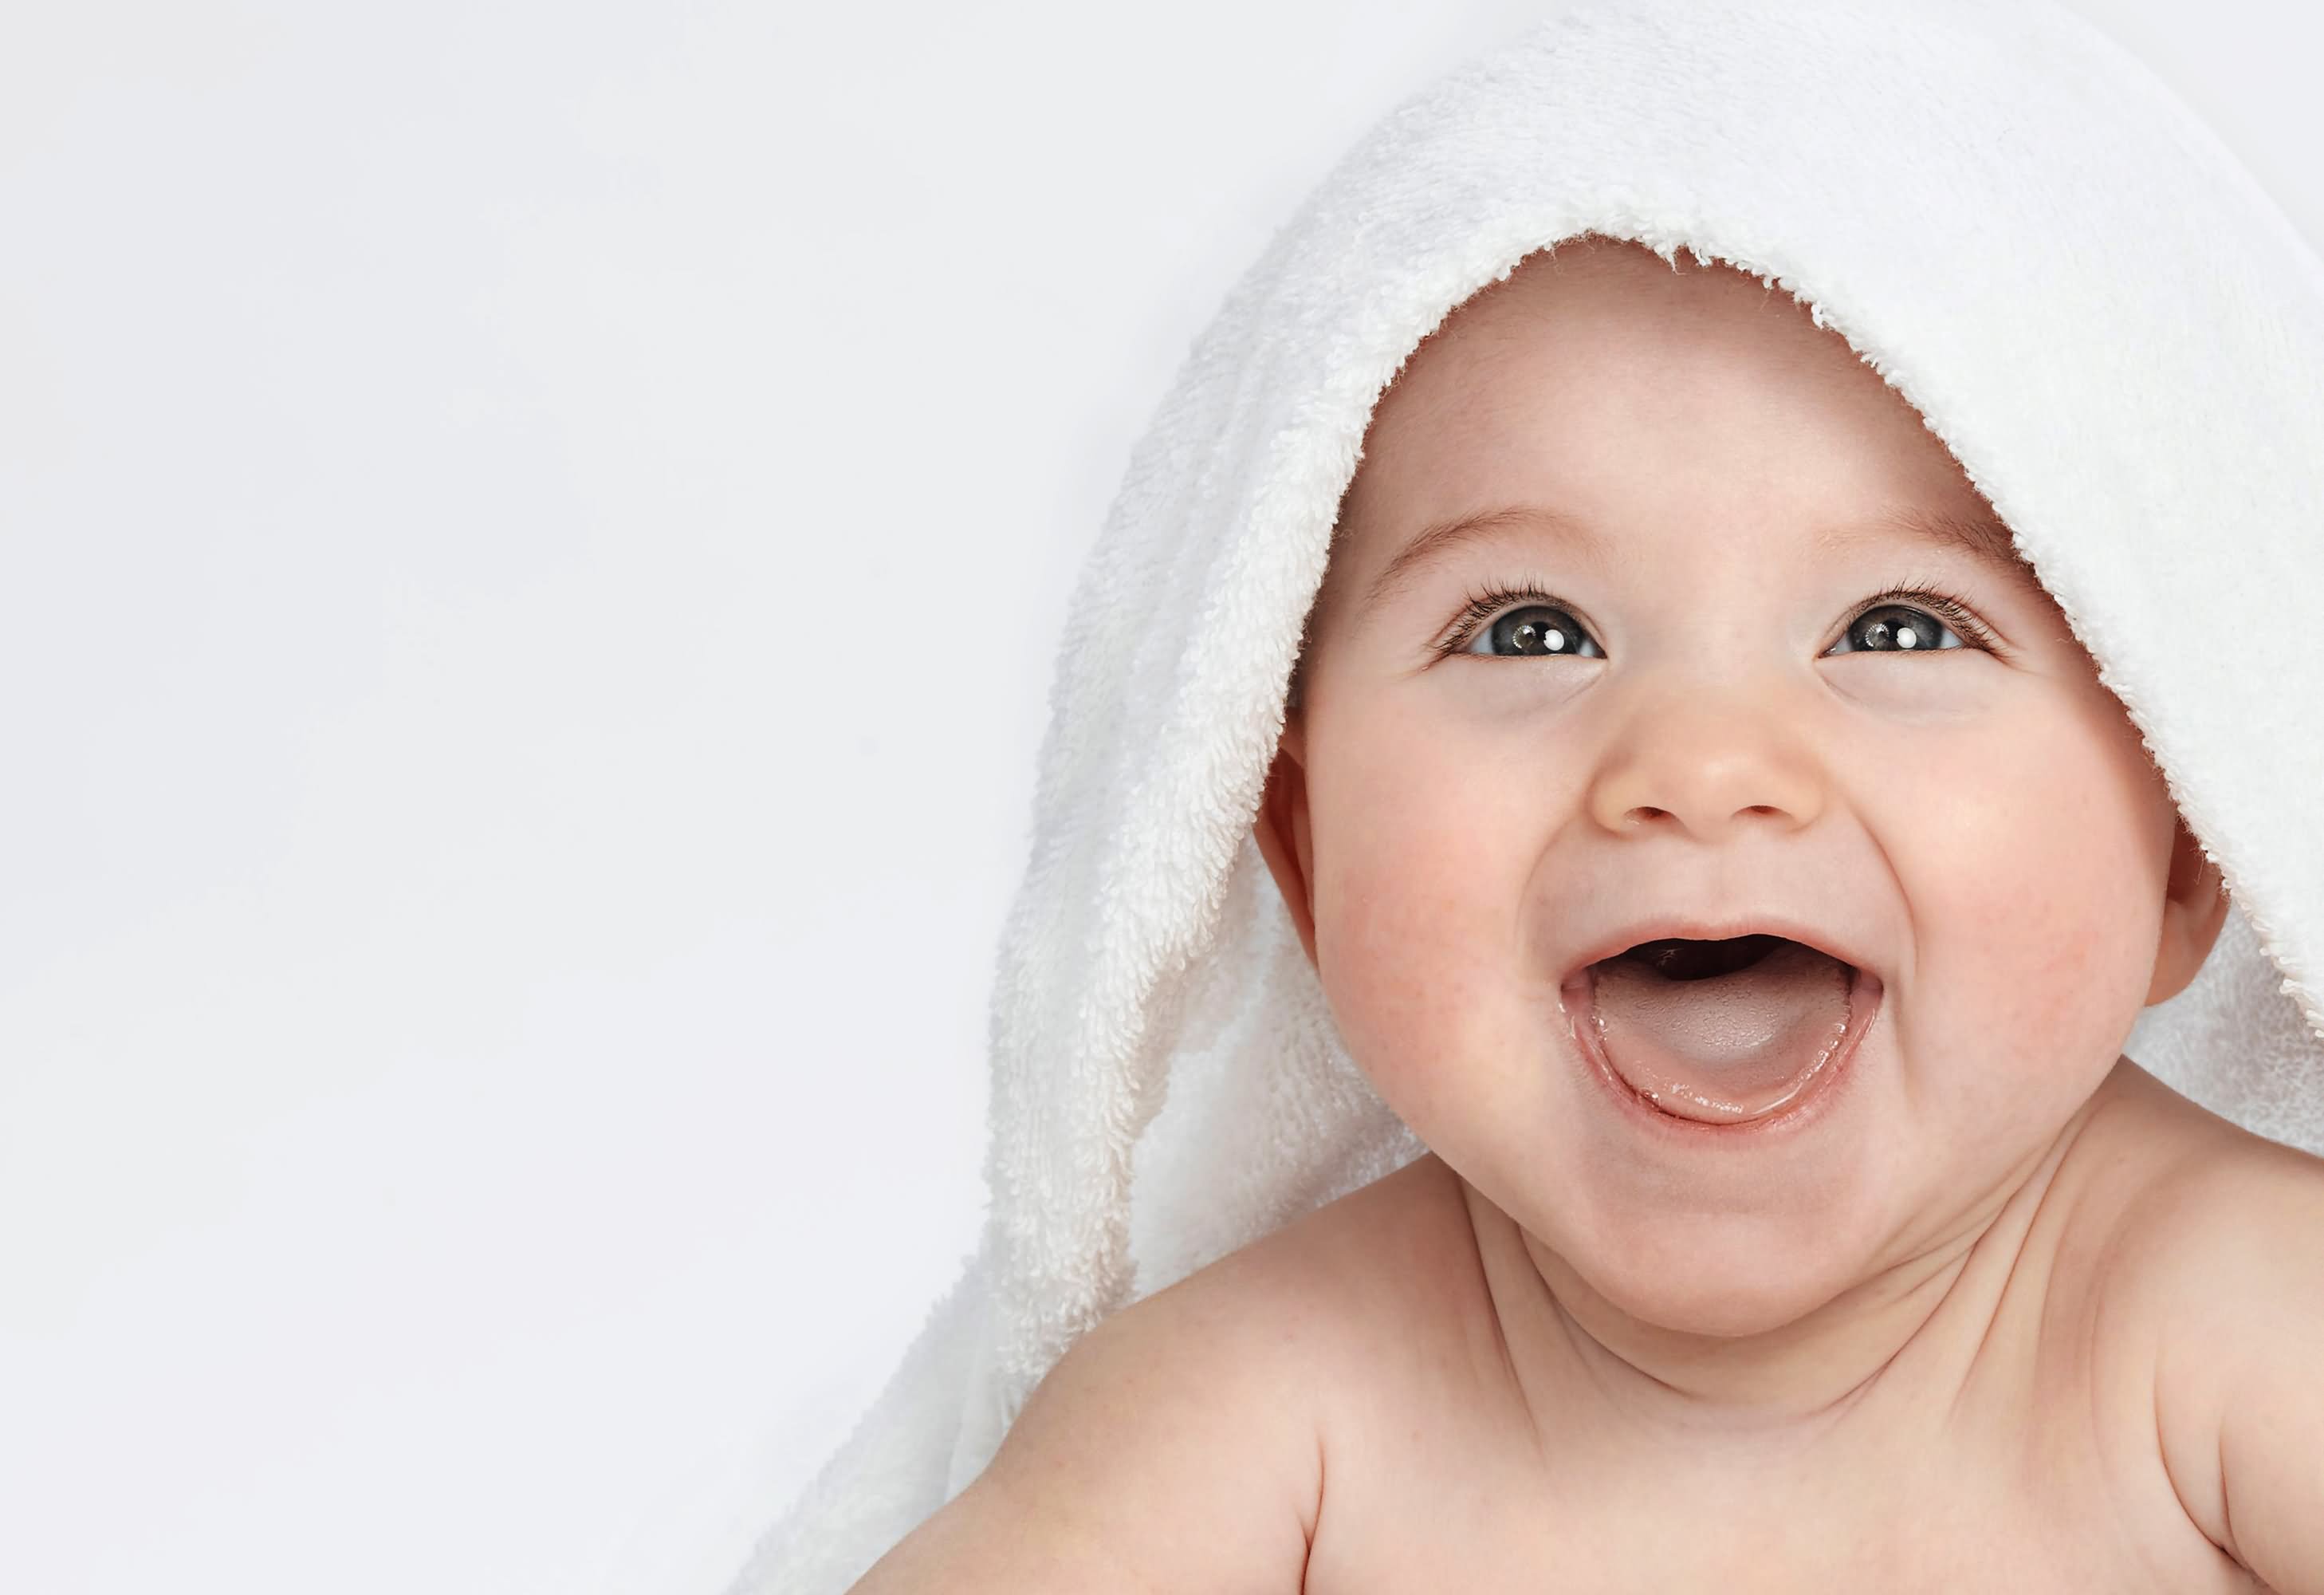 Cute Smiling Baby Lying Under Towel